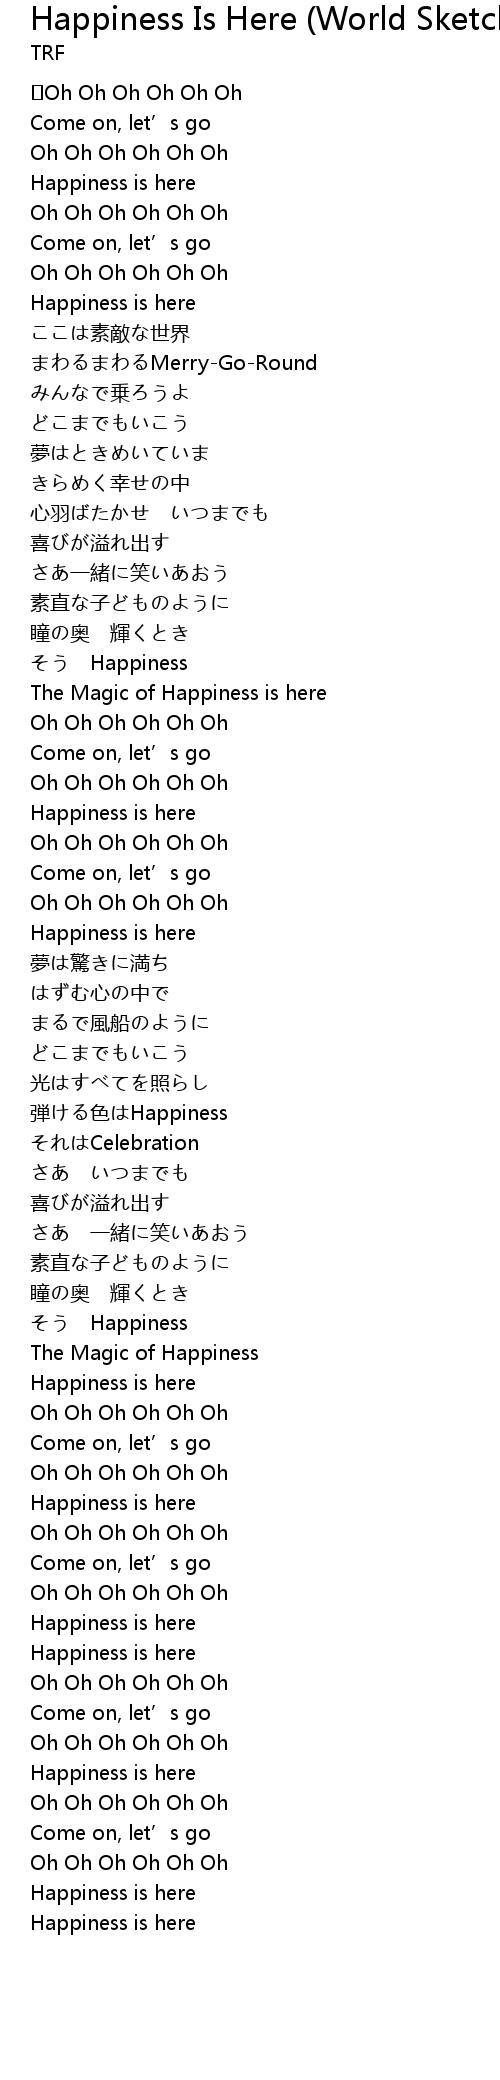 Happiness Is Here World Sketch Remix Tokyo Disney Resort R 30th Anniversary Theme Song Lyrics Follow Lyrics